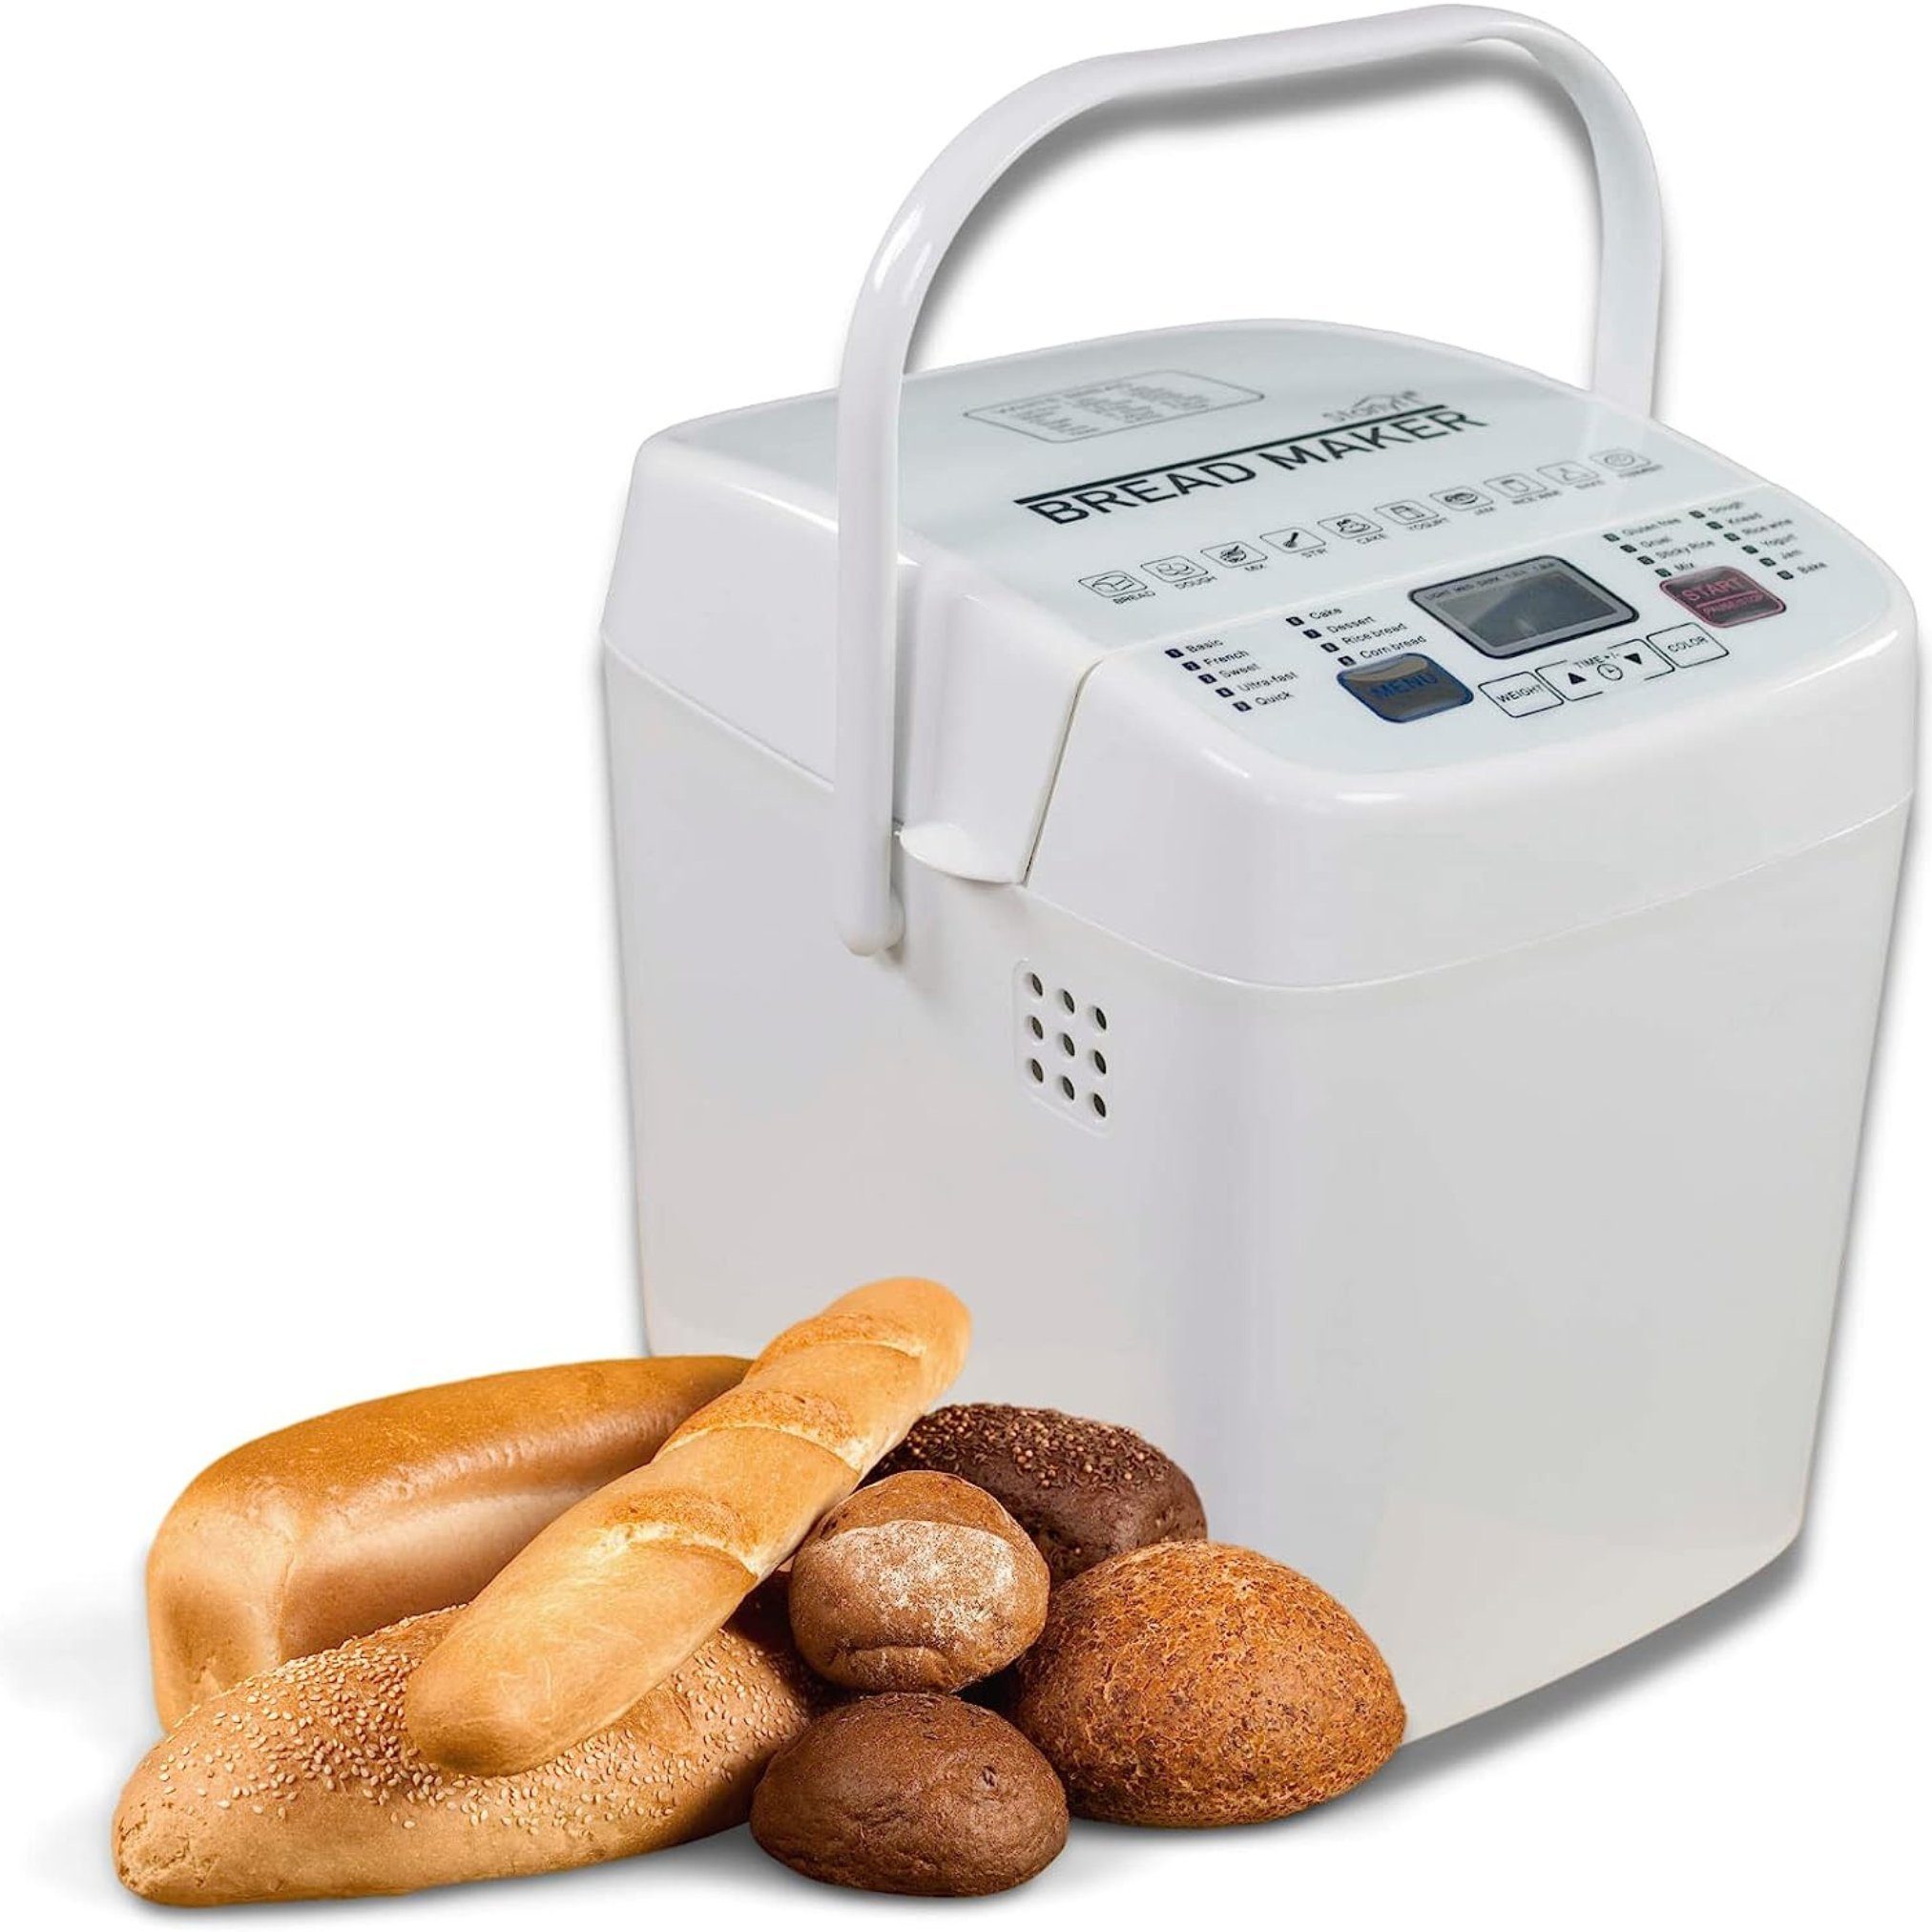 500,00 - Brot, Bread W, Starlyf Warmhalte Programme, Brotbackautomat Funktion Maker, Timer, 750g Marmelade, für Joghurt, 14